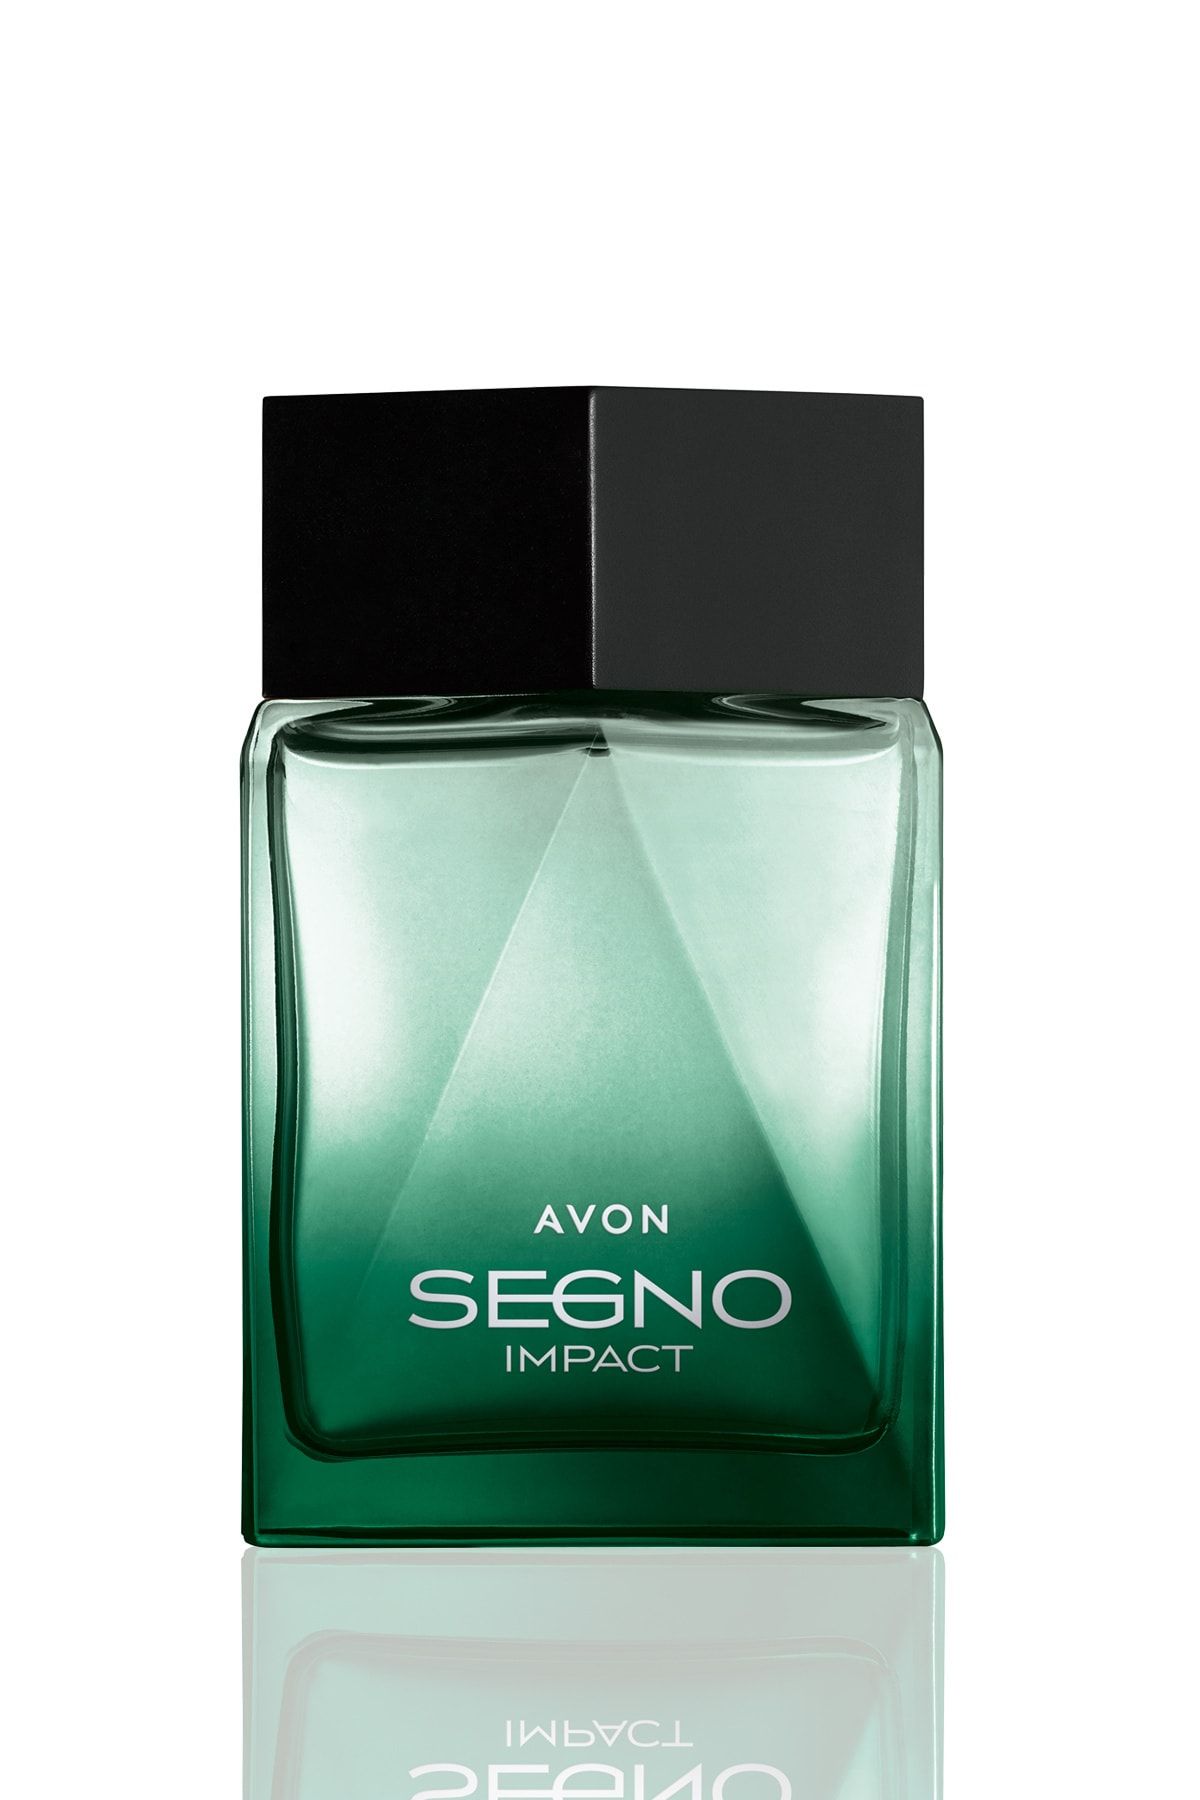 Avon Segno Impact Erkek Parfüm Edp 75 Ml.